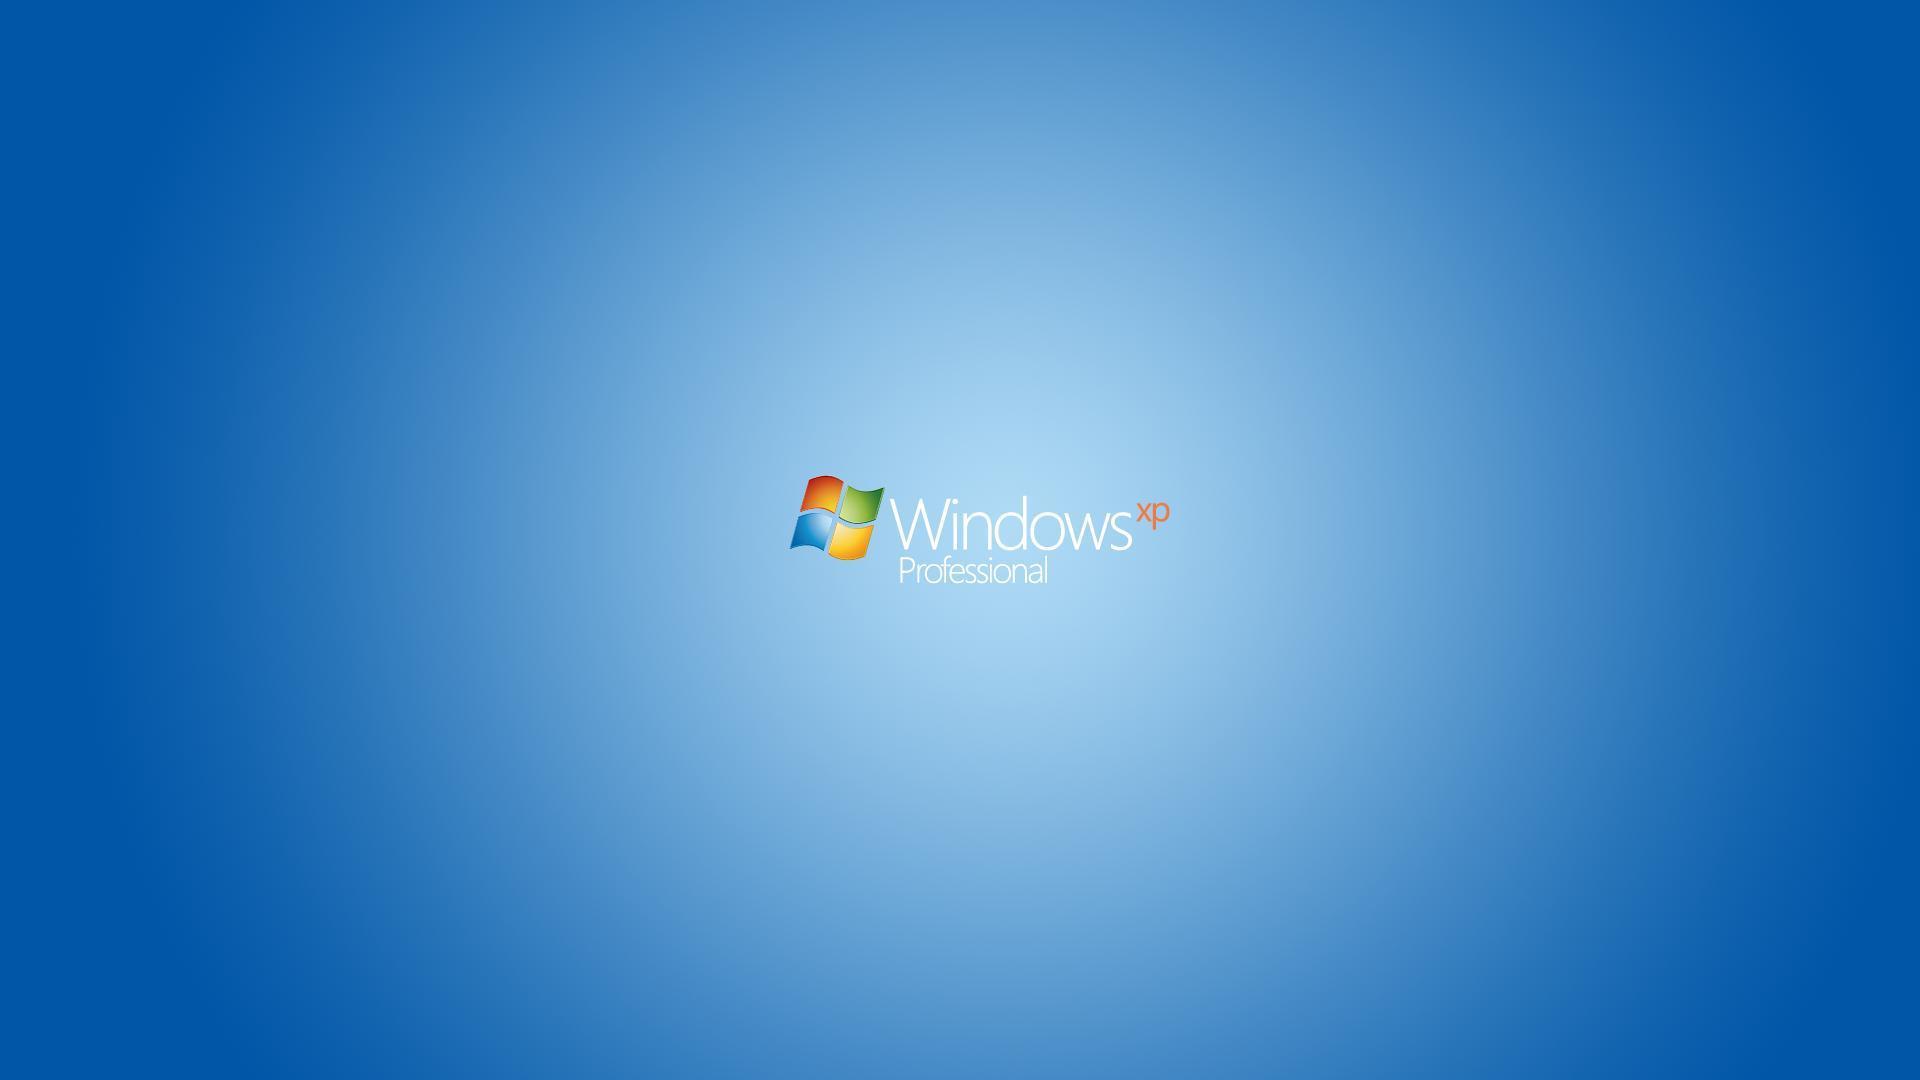 Windows XP Professional Wallpaper